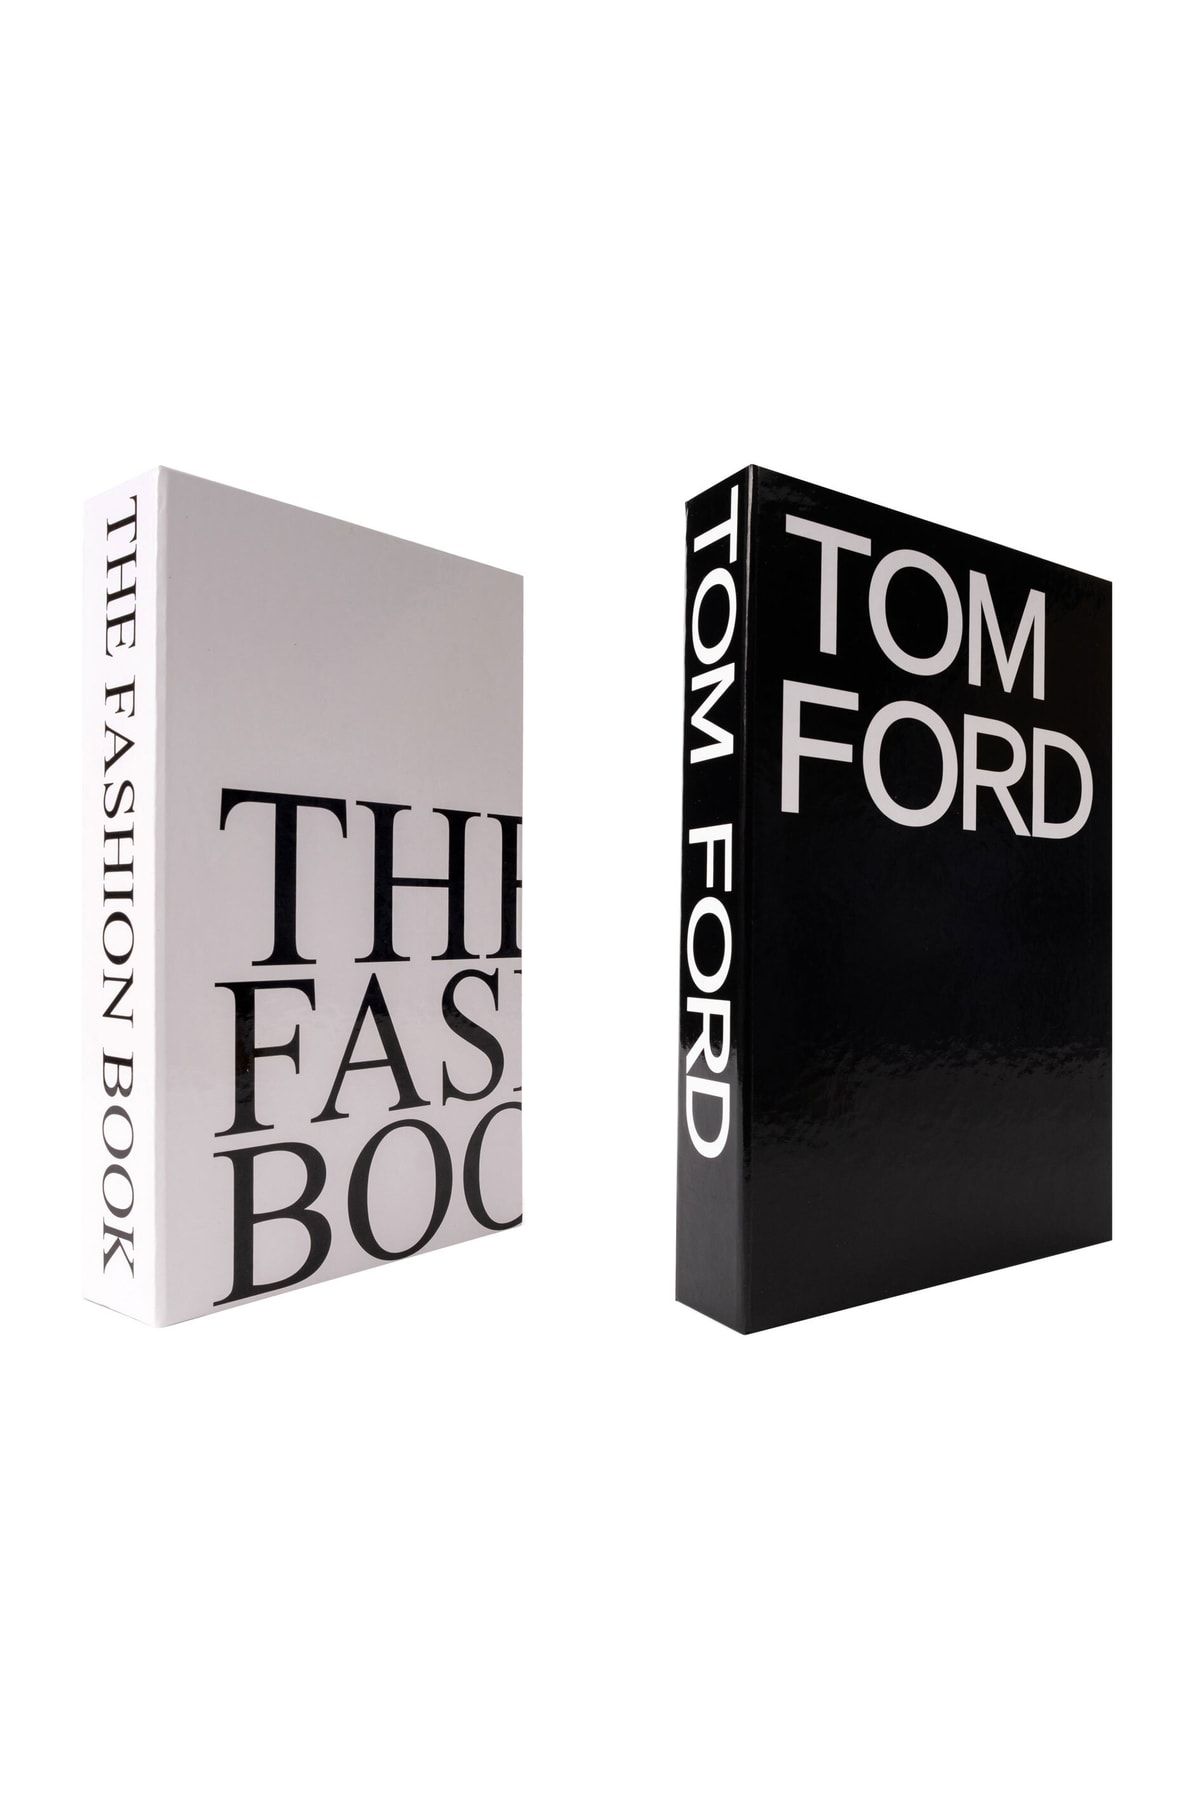 Том форд книга. Книга том Форд. Книга том Форд в интерьере. Лиз том Форд книги. Идеальный исход Лиз том Форд книга.